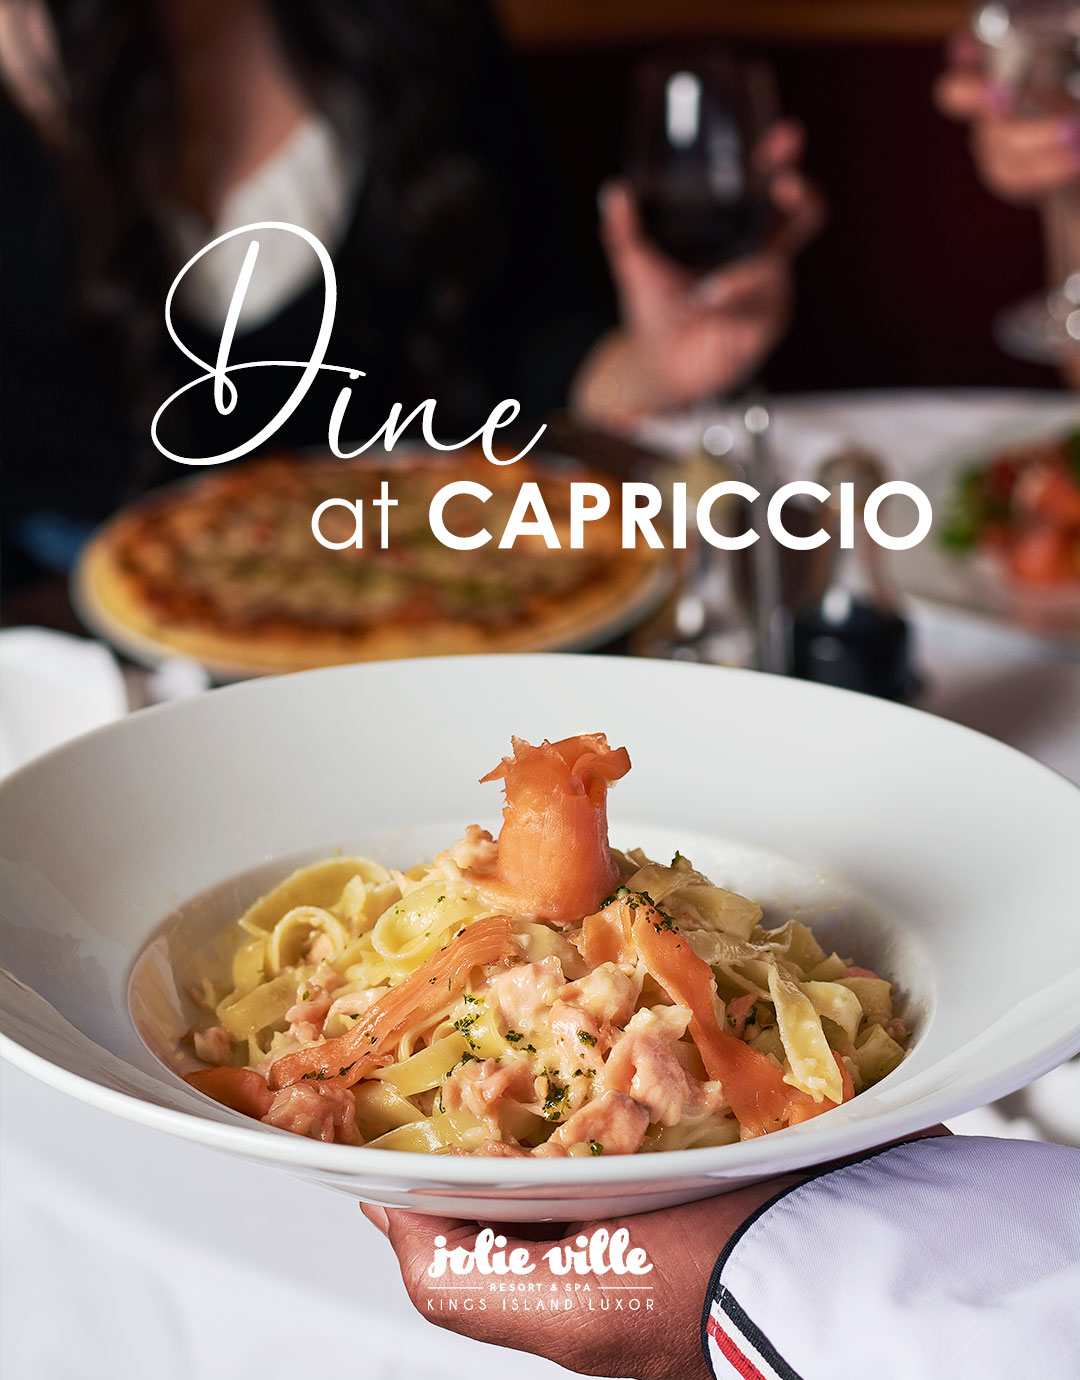 Capriccio Italian Restaurant-in-jolie-ville-hotel-spa-kings-island-luxor